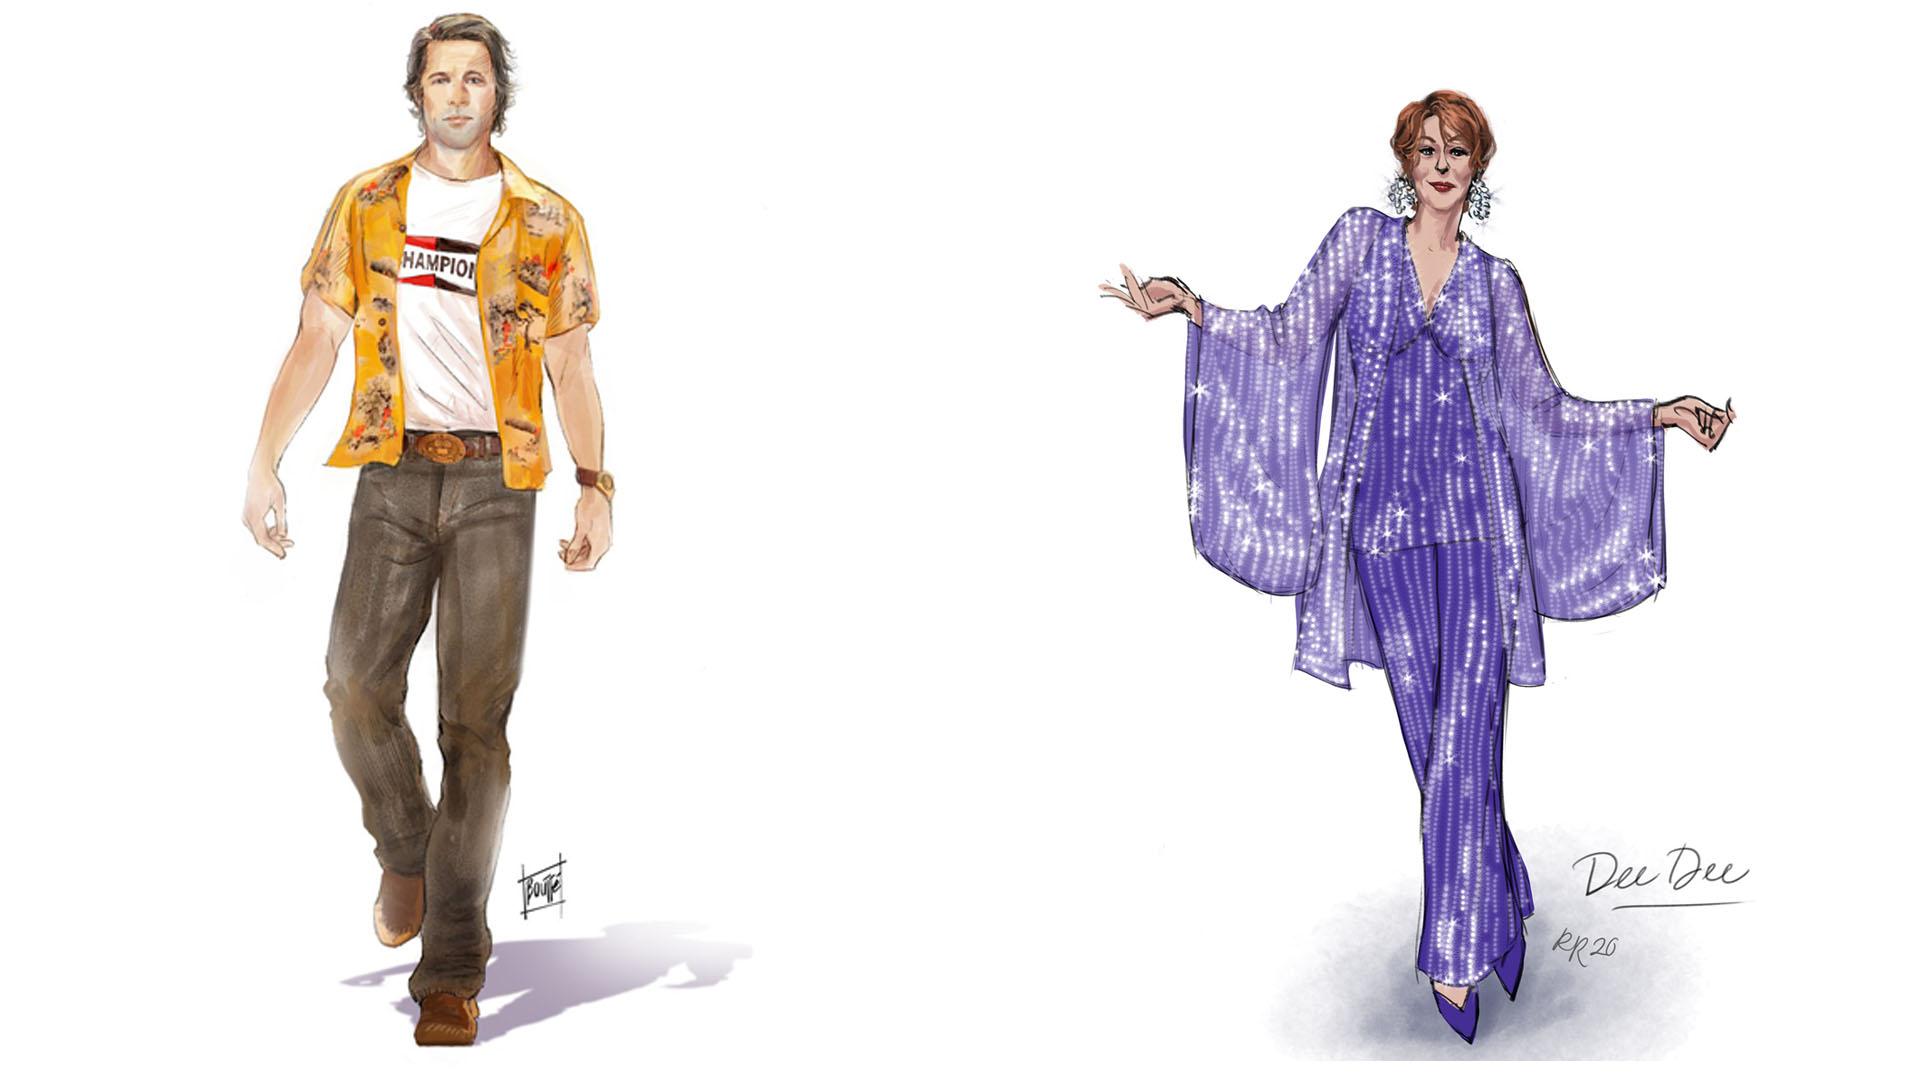 Left: Costume design by Phillip Boutte, Jr. Right: Costume design by Robin Richesson